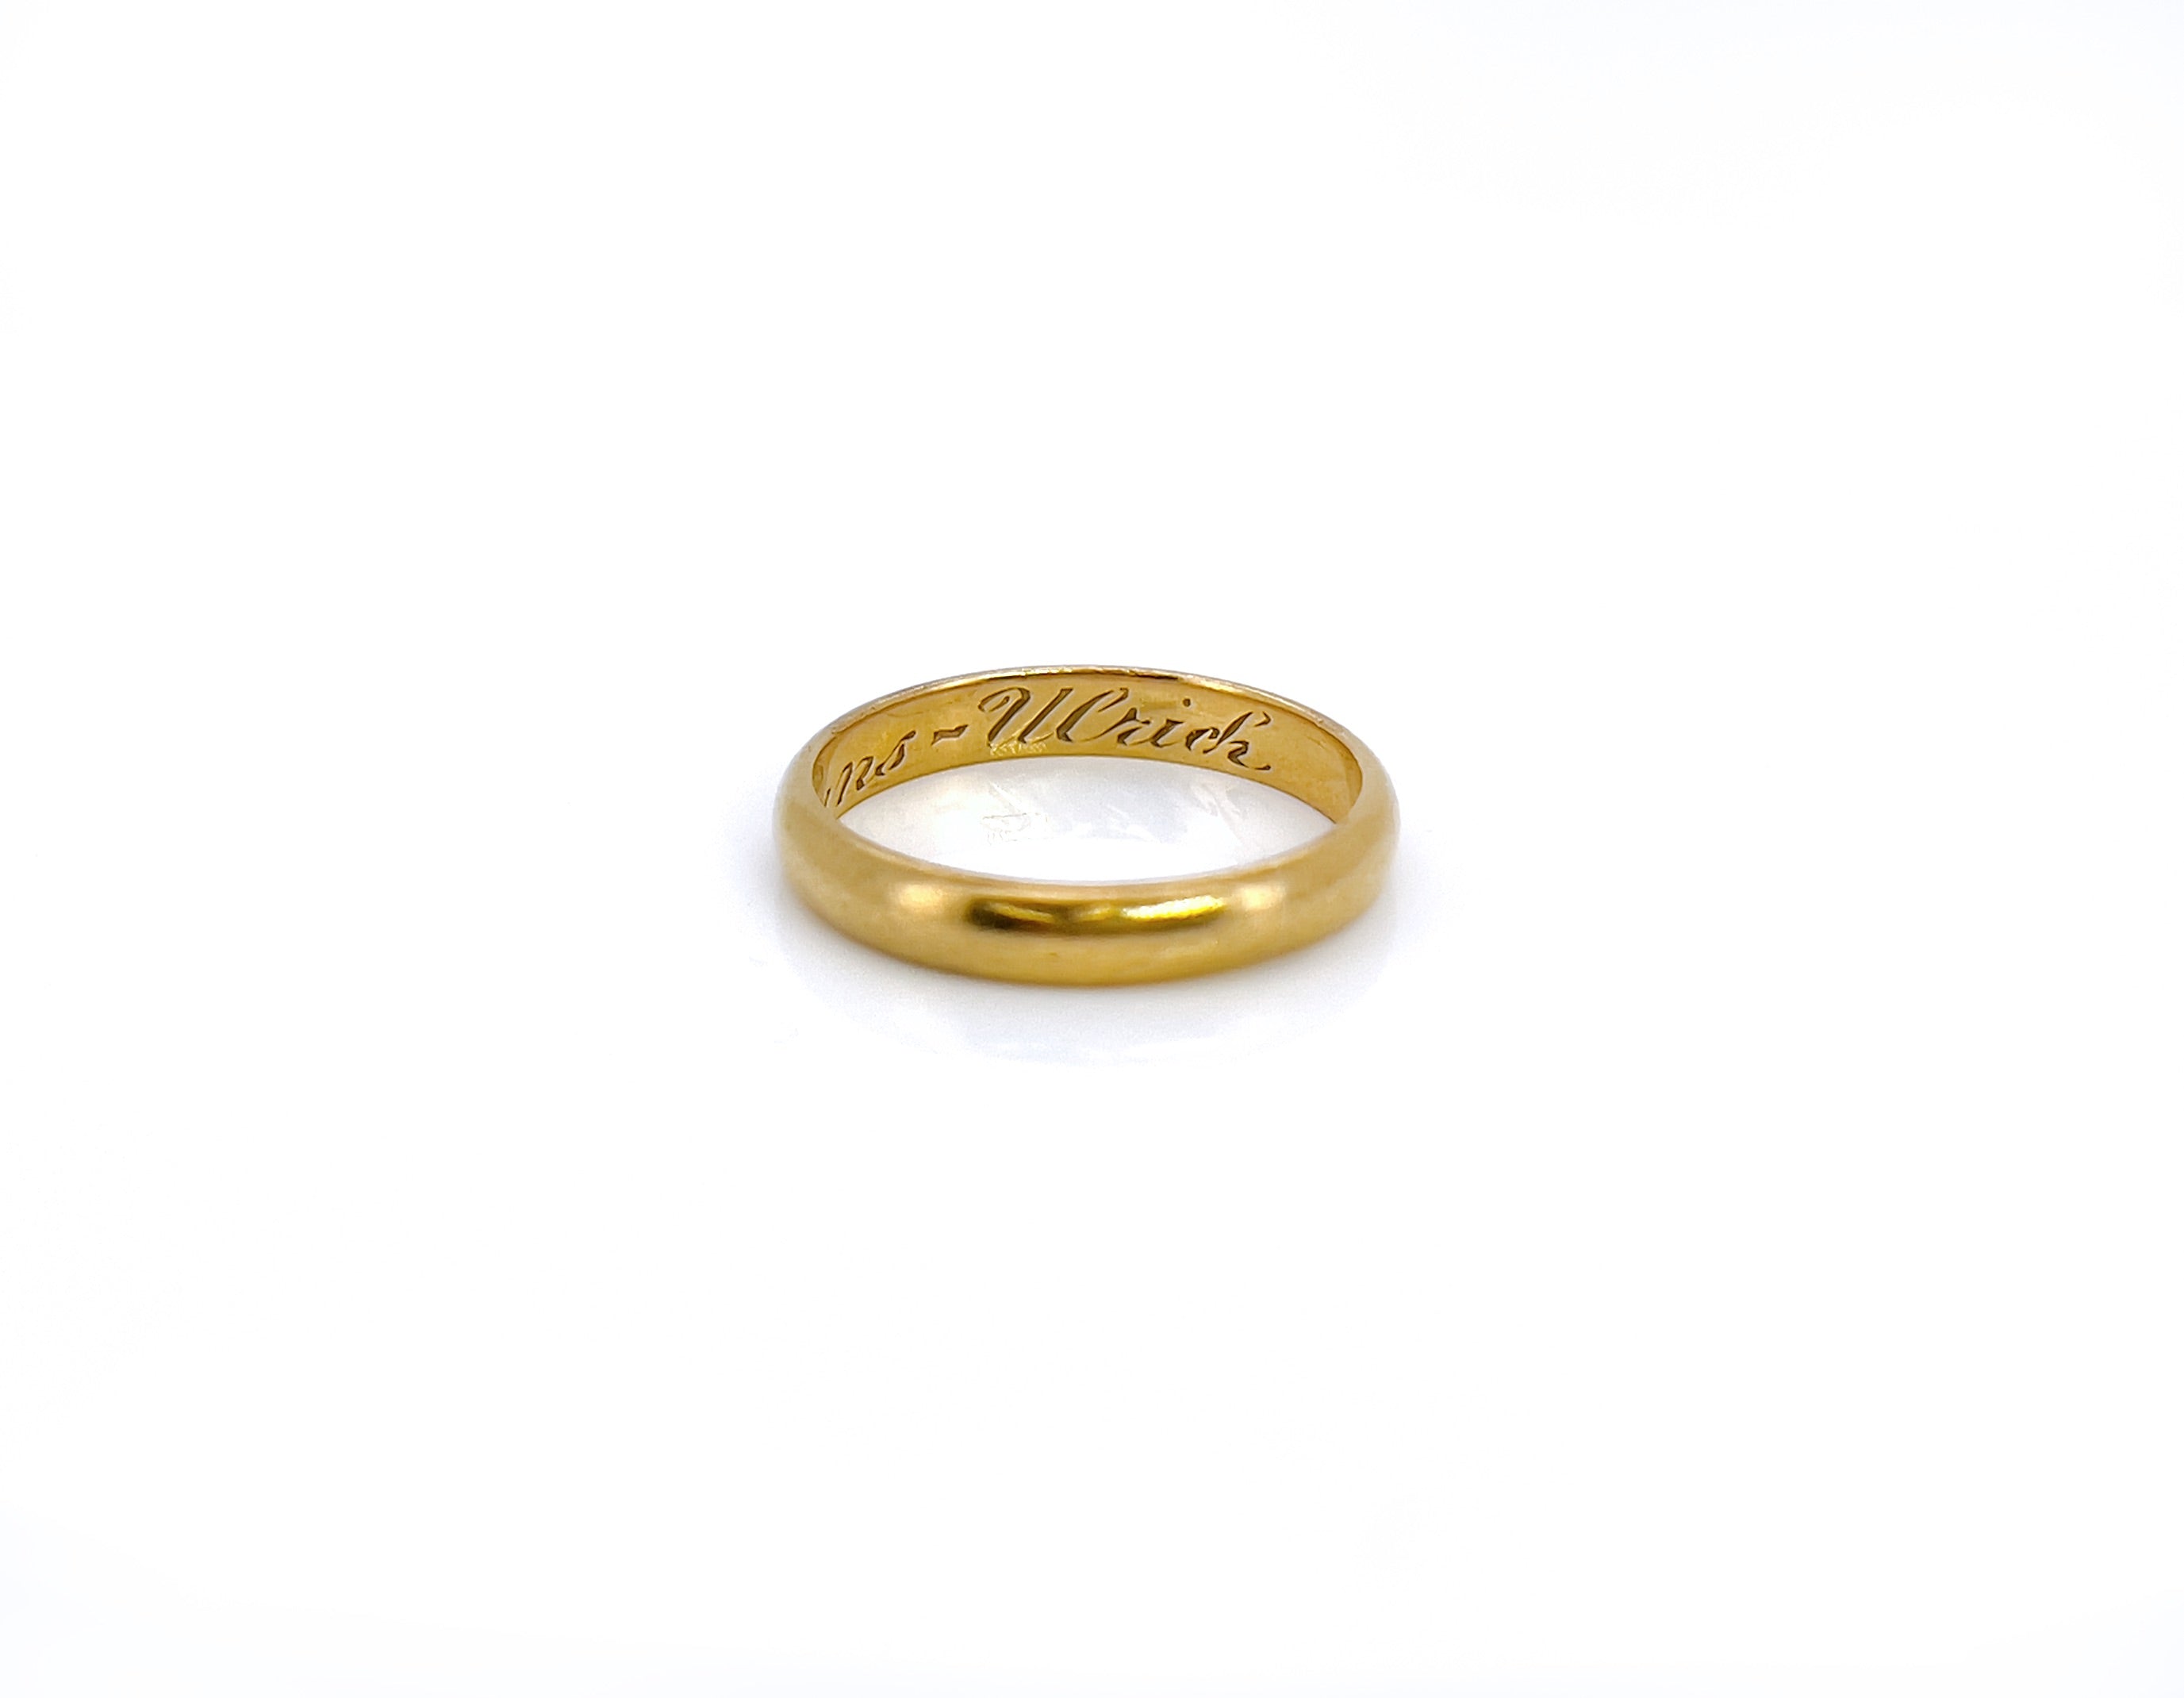 Vintage 22K Yellow Gold Ring, 25.12.31 Hans- Wrick, Size 6.75